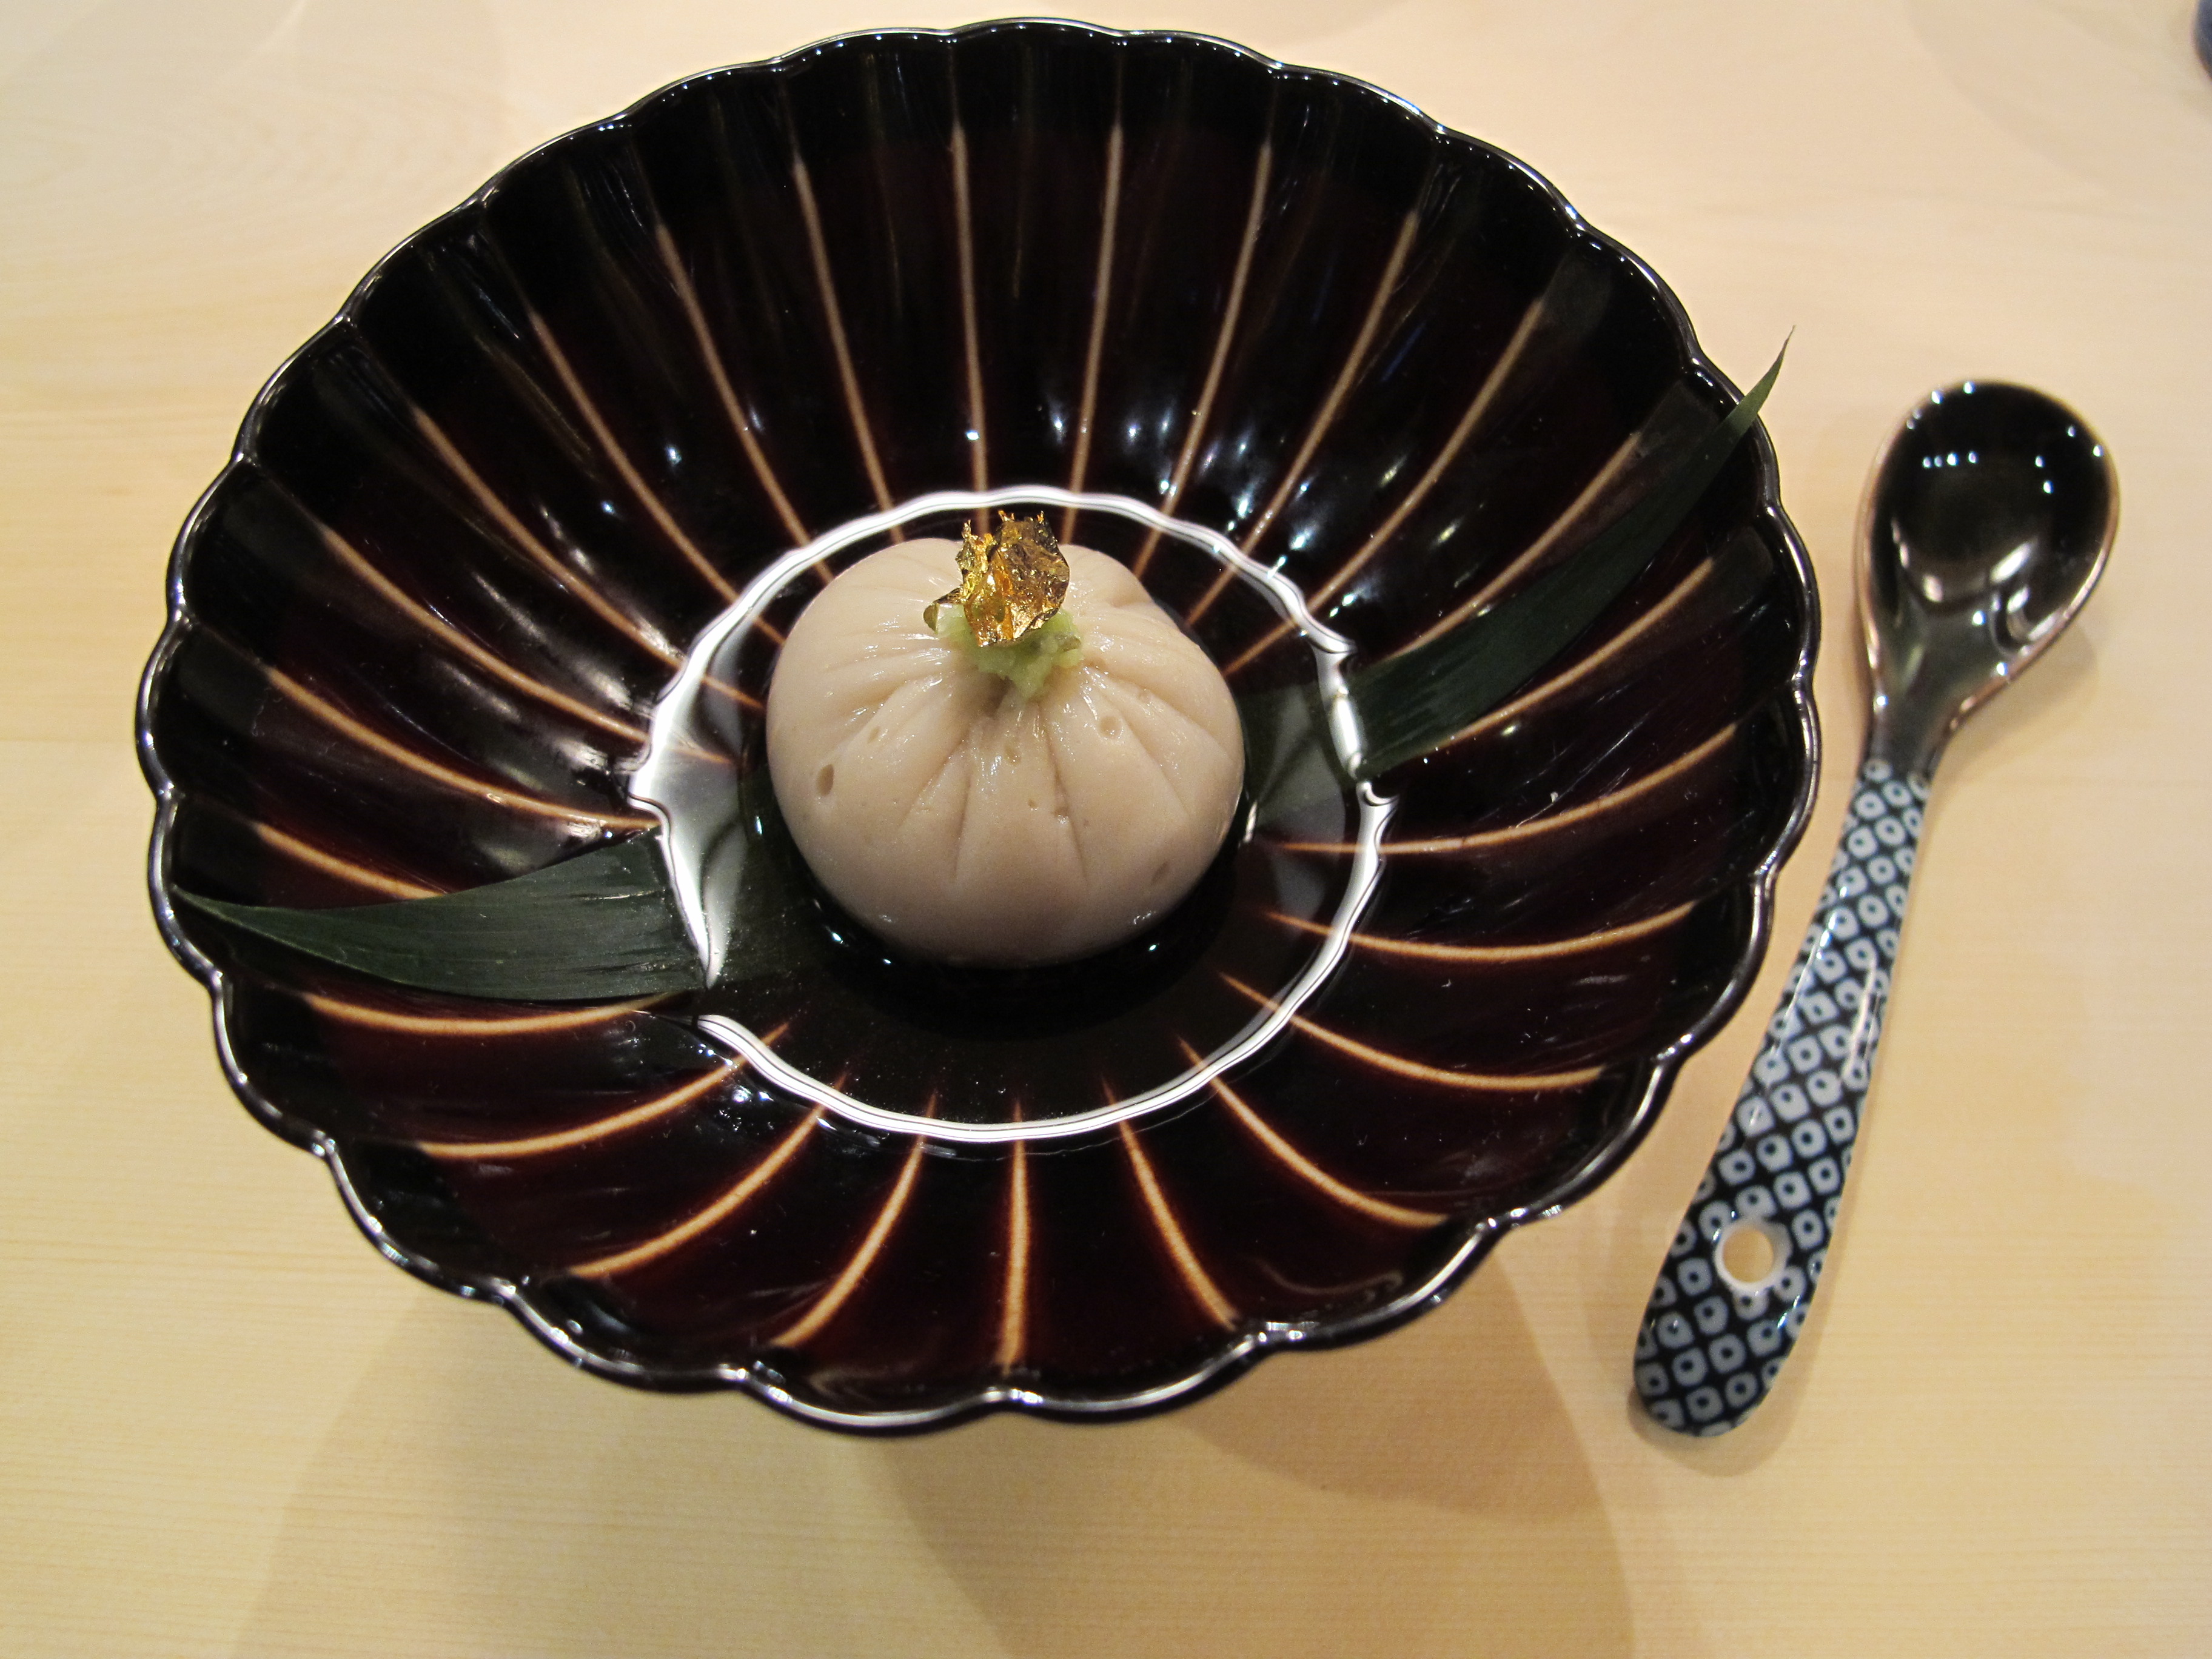 A tofu-sesame dumpling topped with a gold leaf